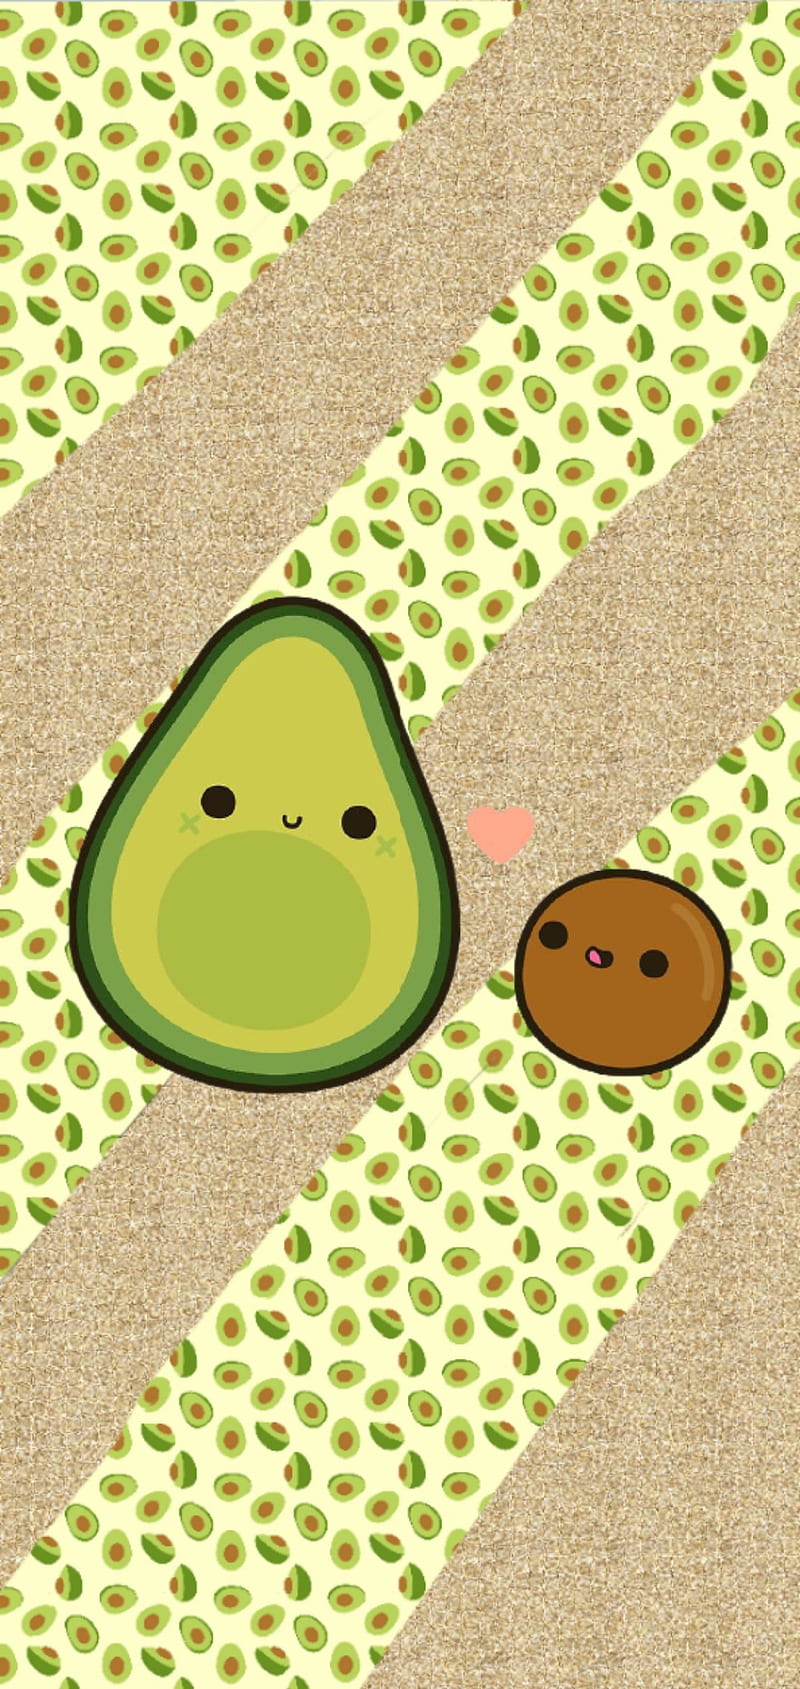 A cute avocado and potatoe on the ground - Avocado